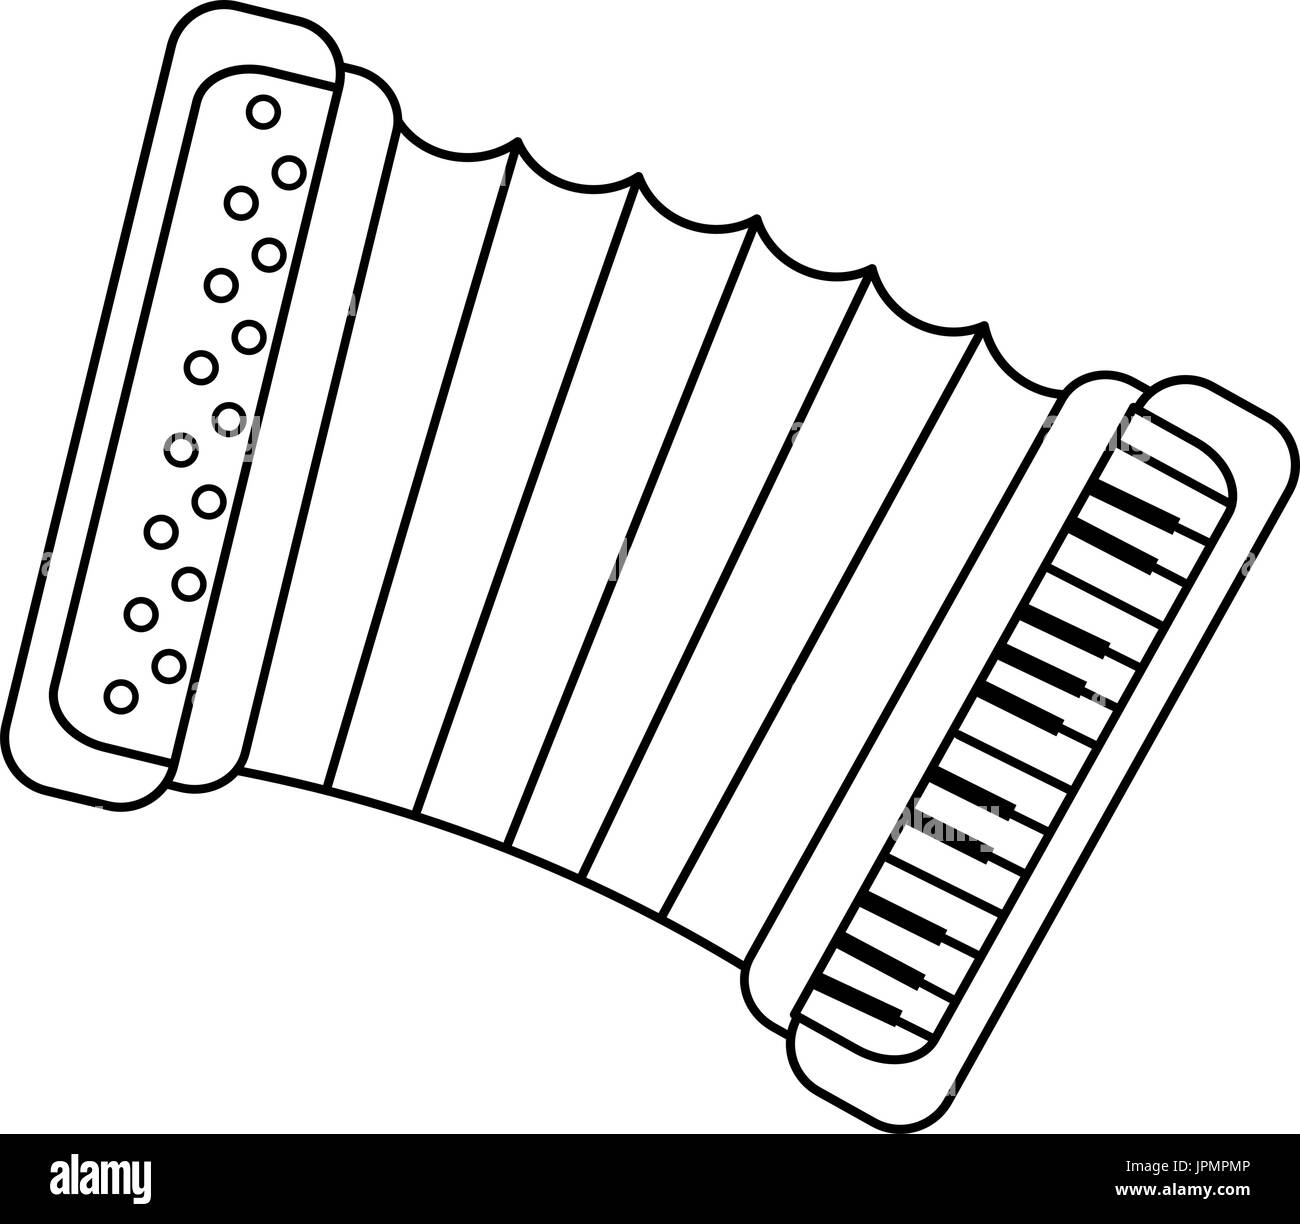 Akkordeon-Musik Instrument Symbol Vektor Illustration Grafik-design  Stock-Vektorgrafik - Alamy